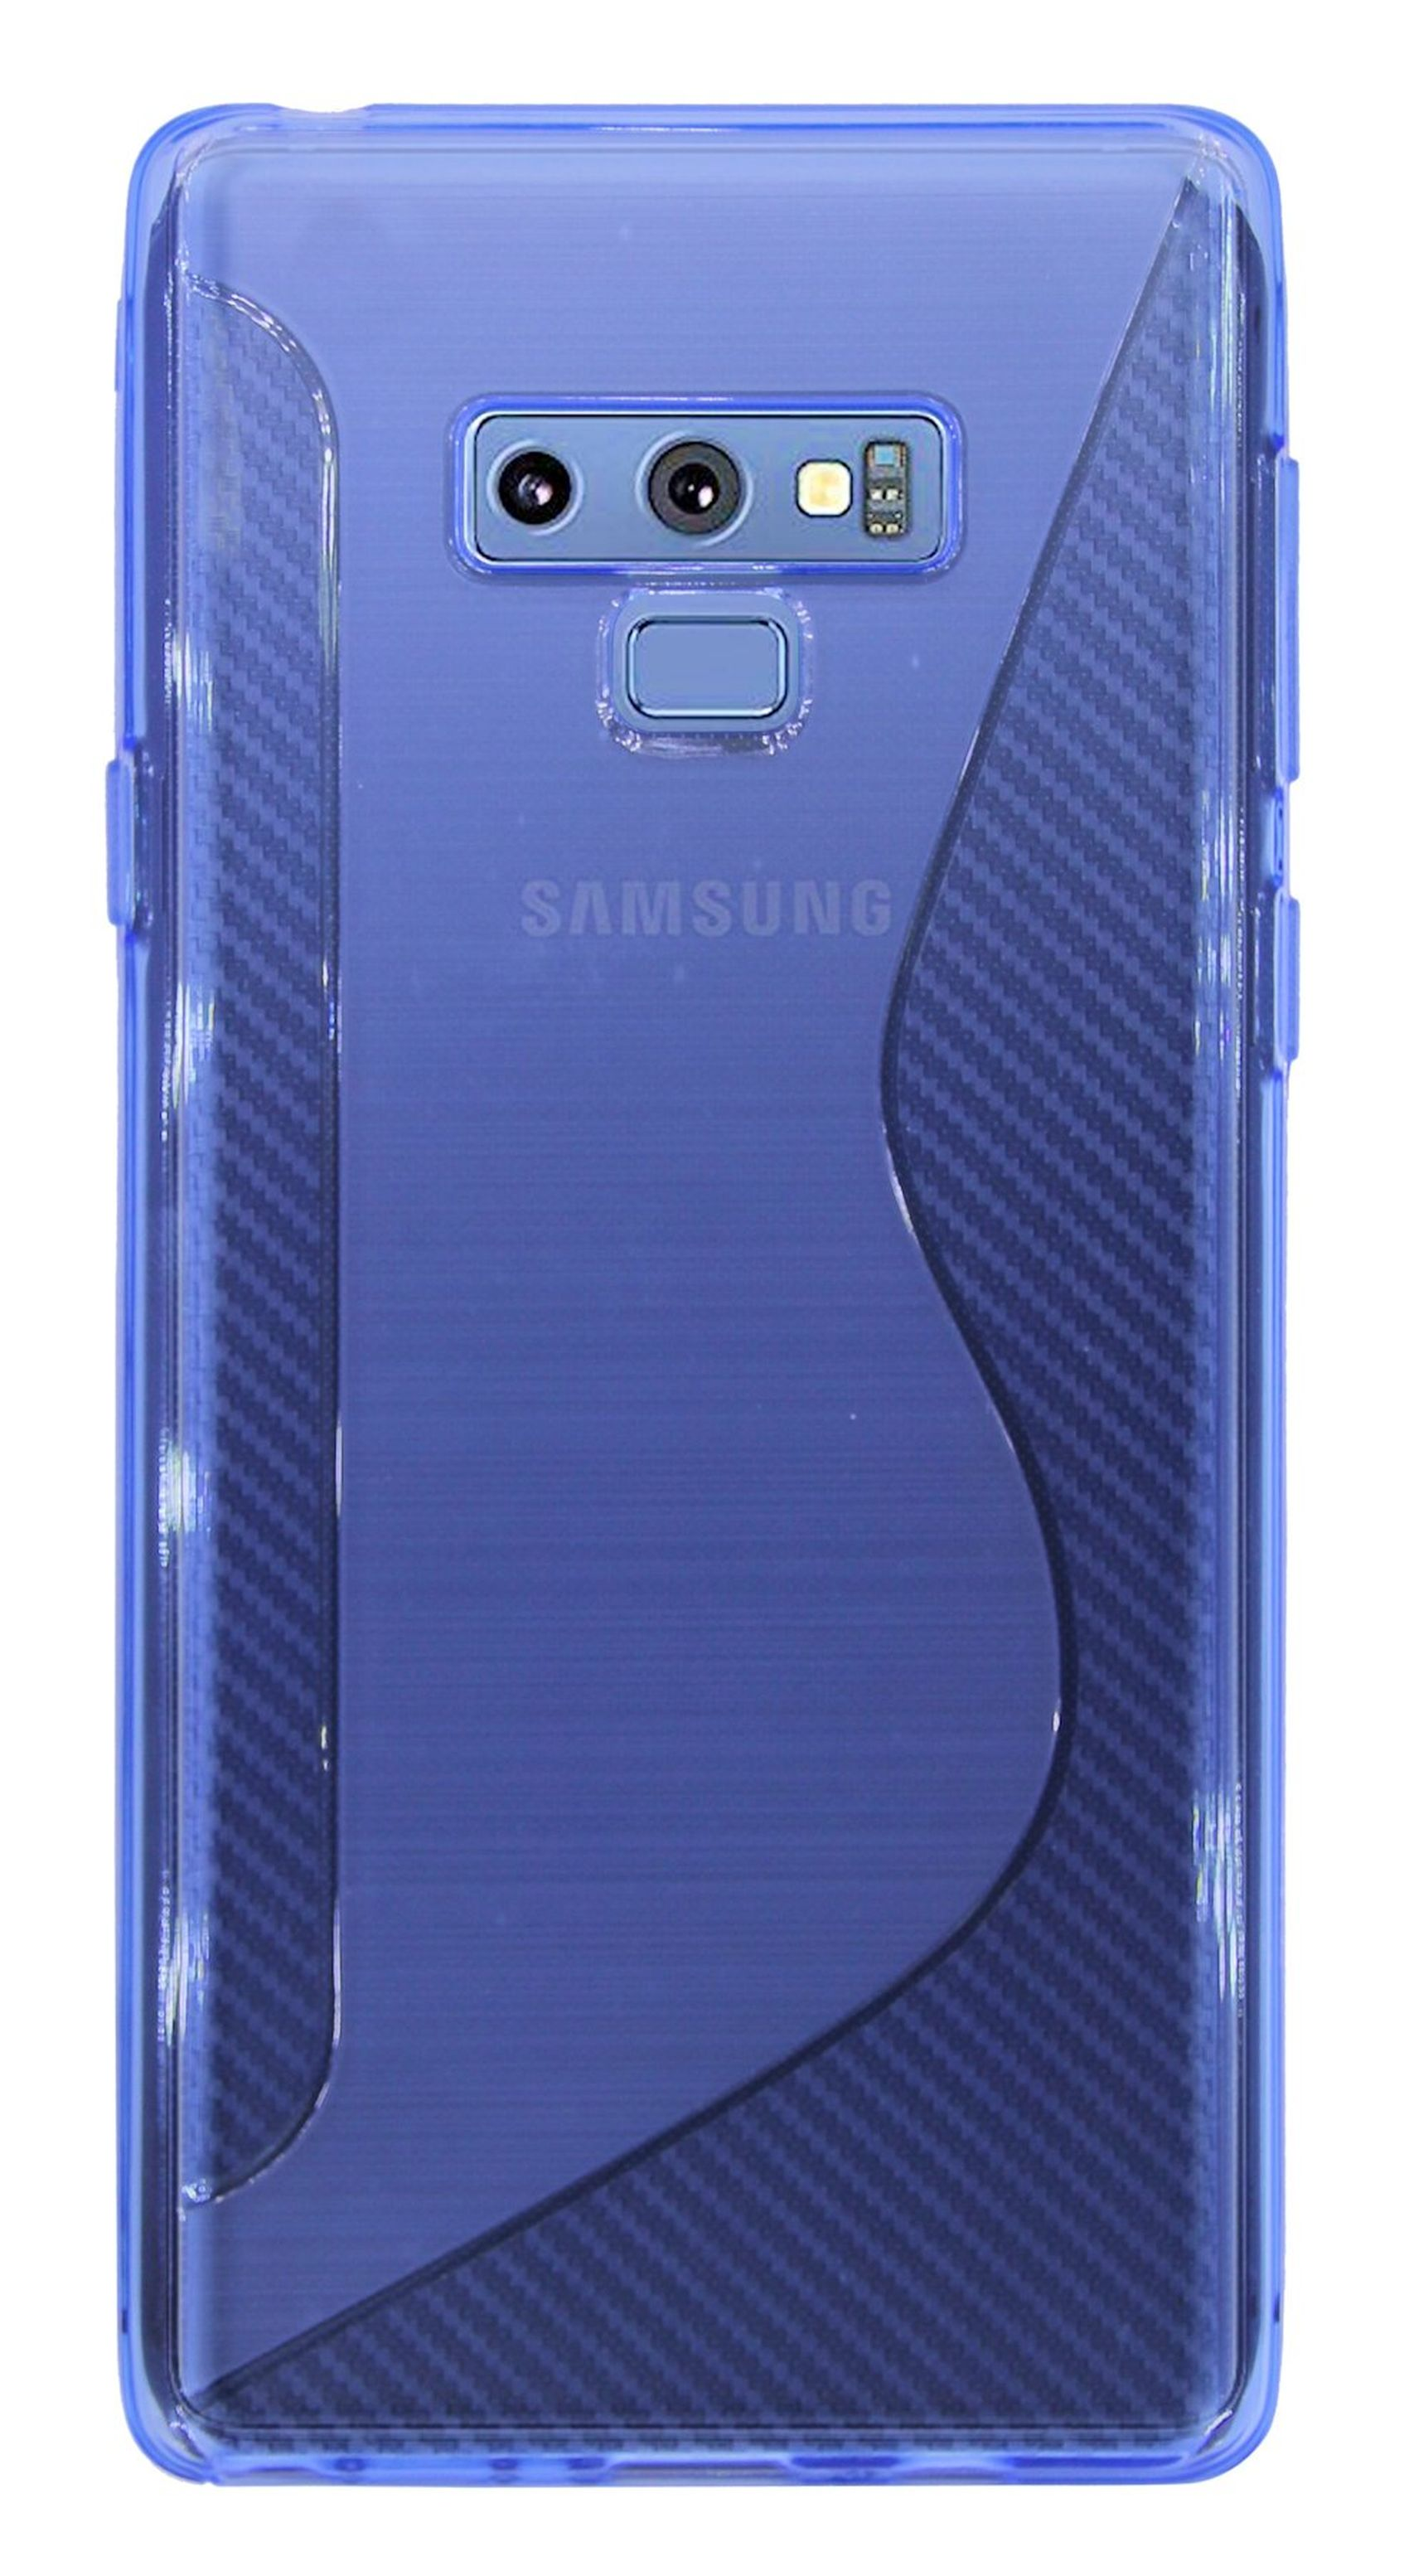 Galaxy Samsung, S-Line Cover, COFI 9, Blau Bumper, Note